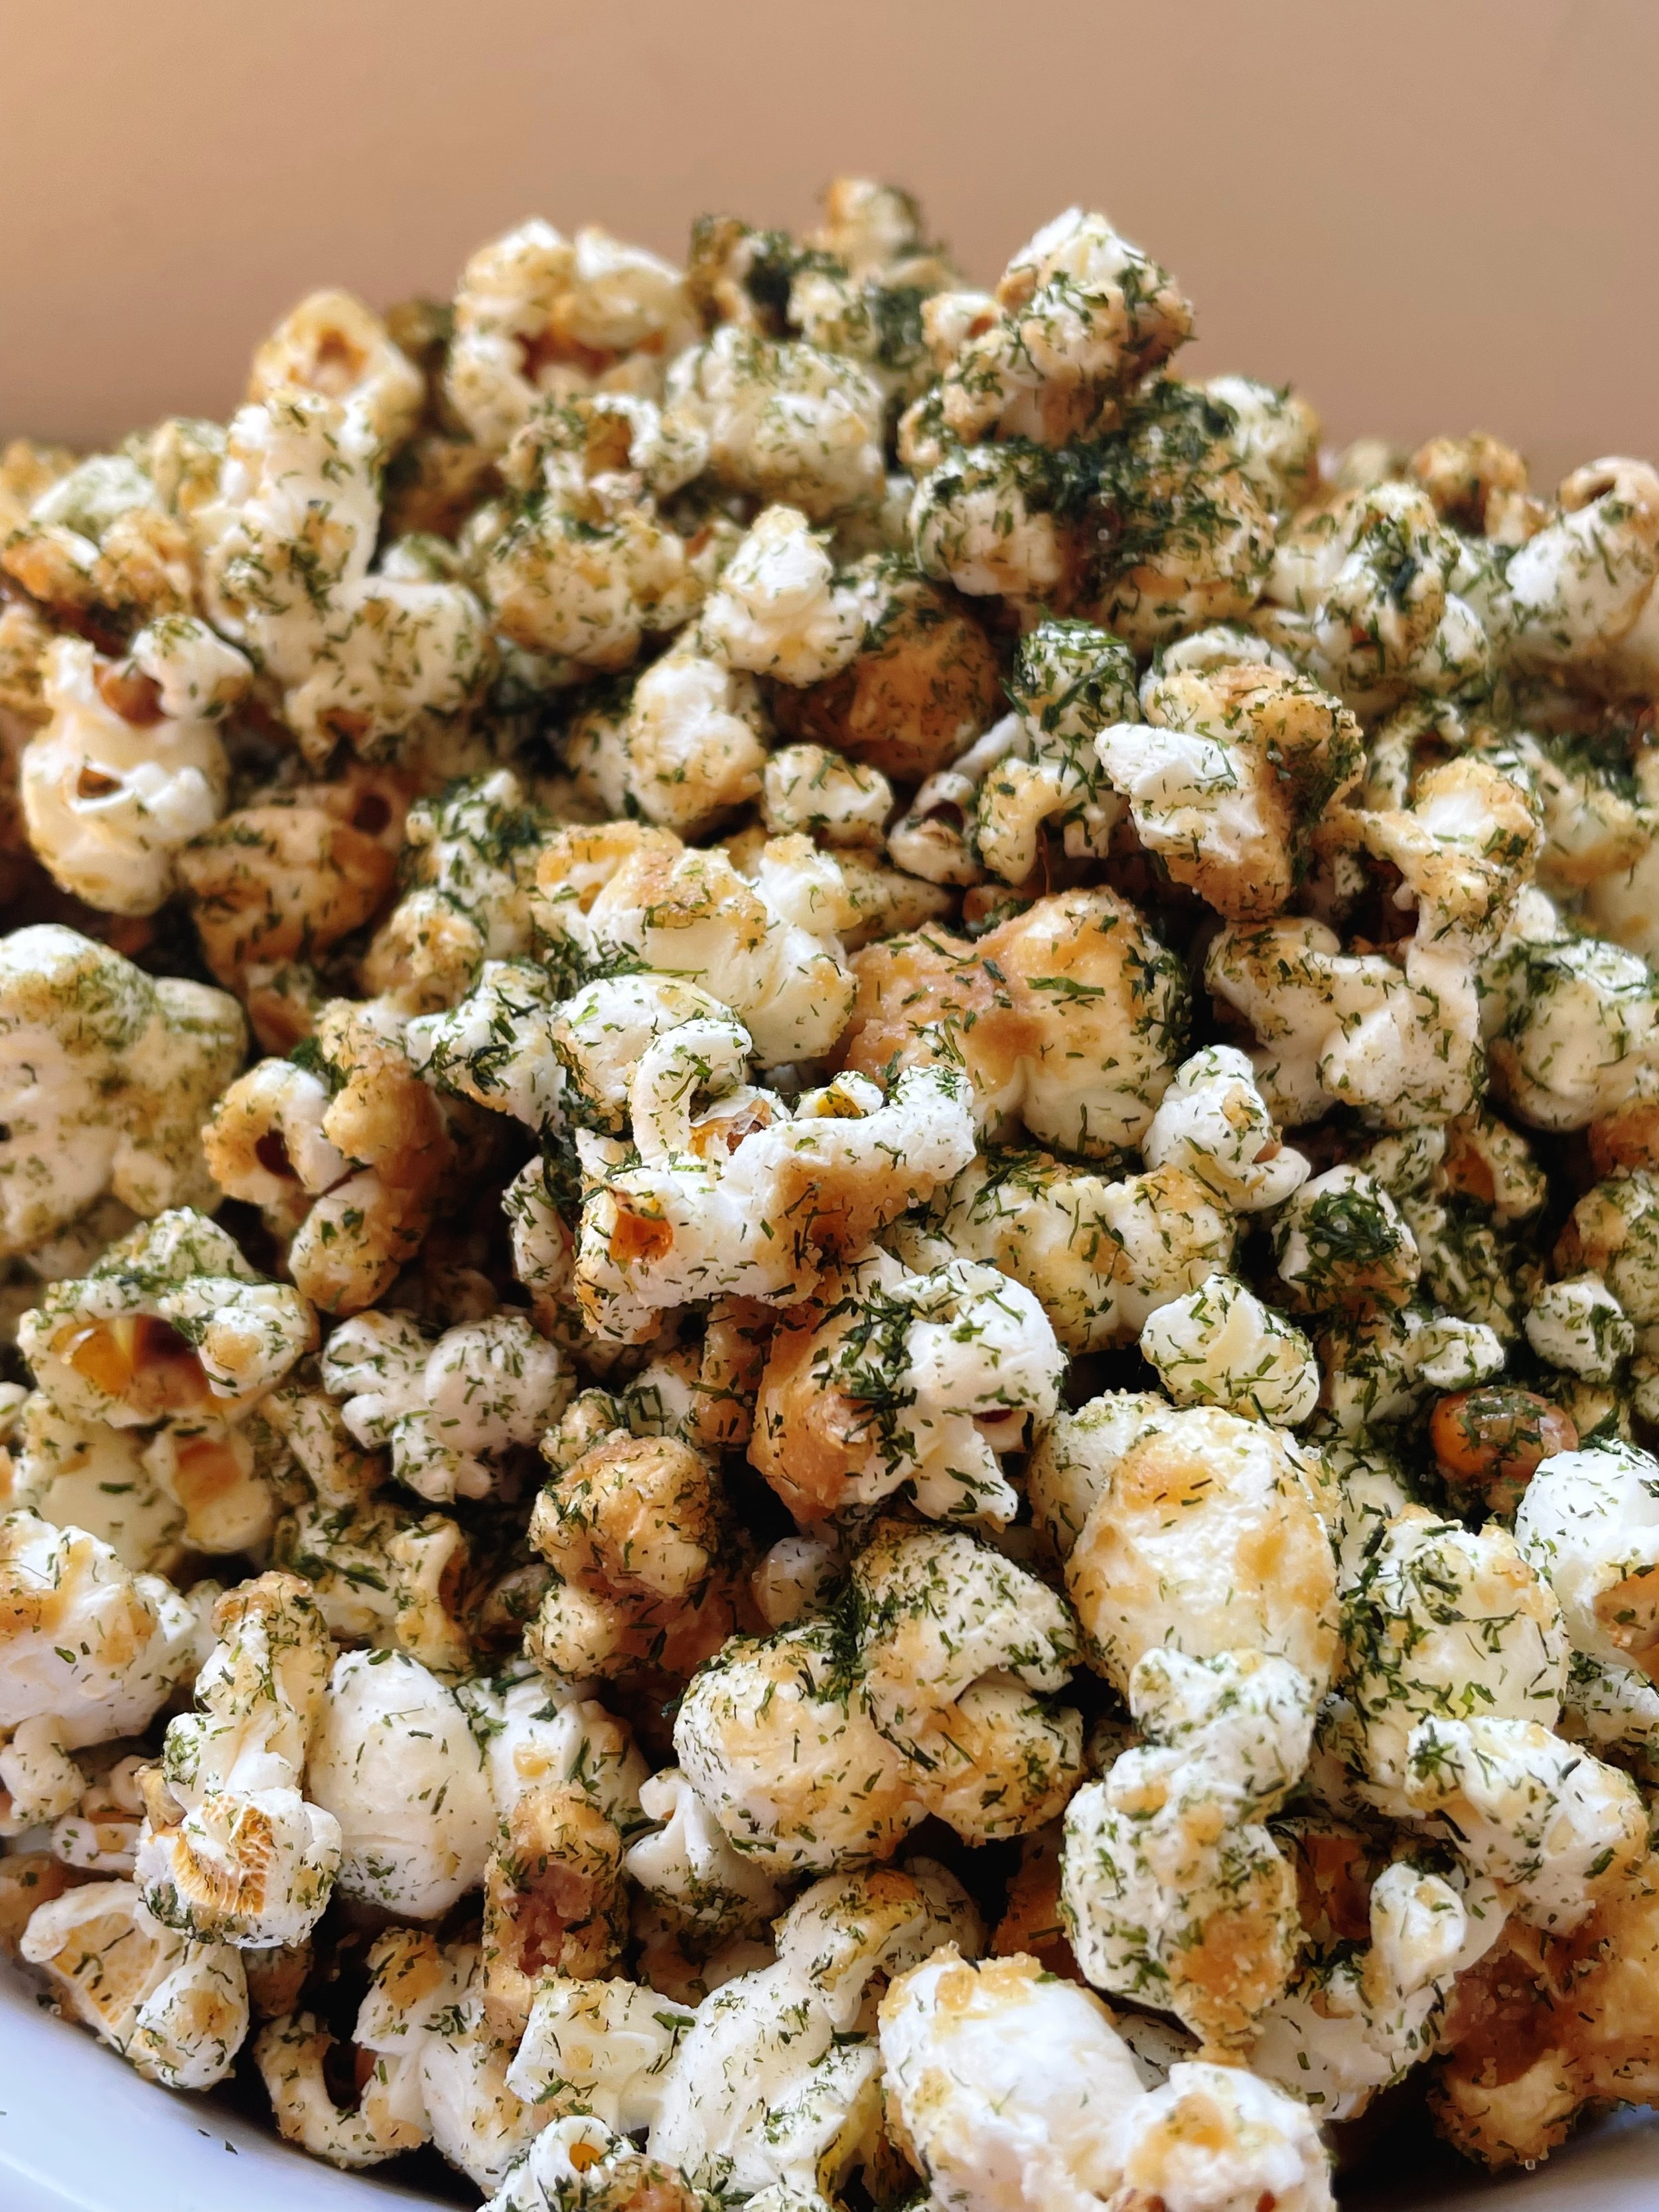 Sea moss seasoned popcorn